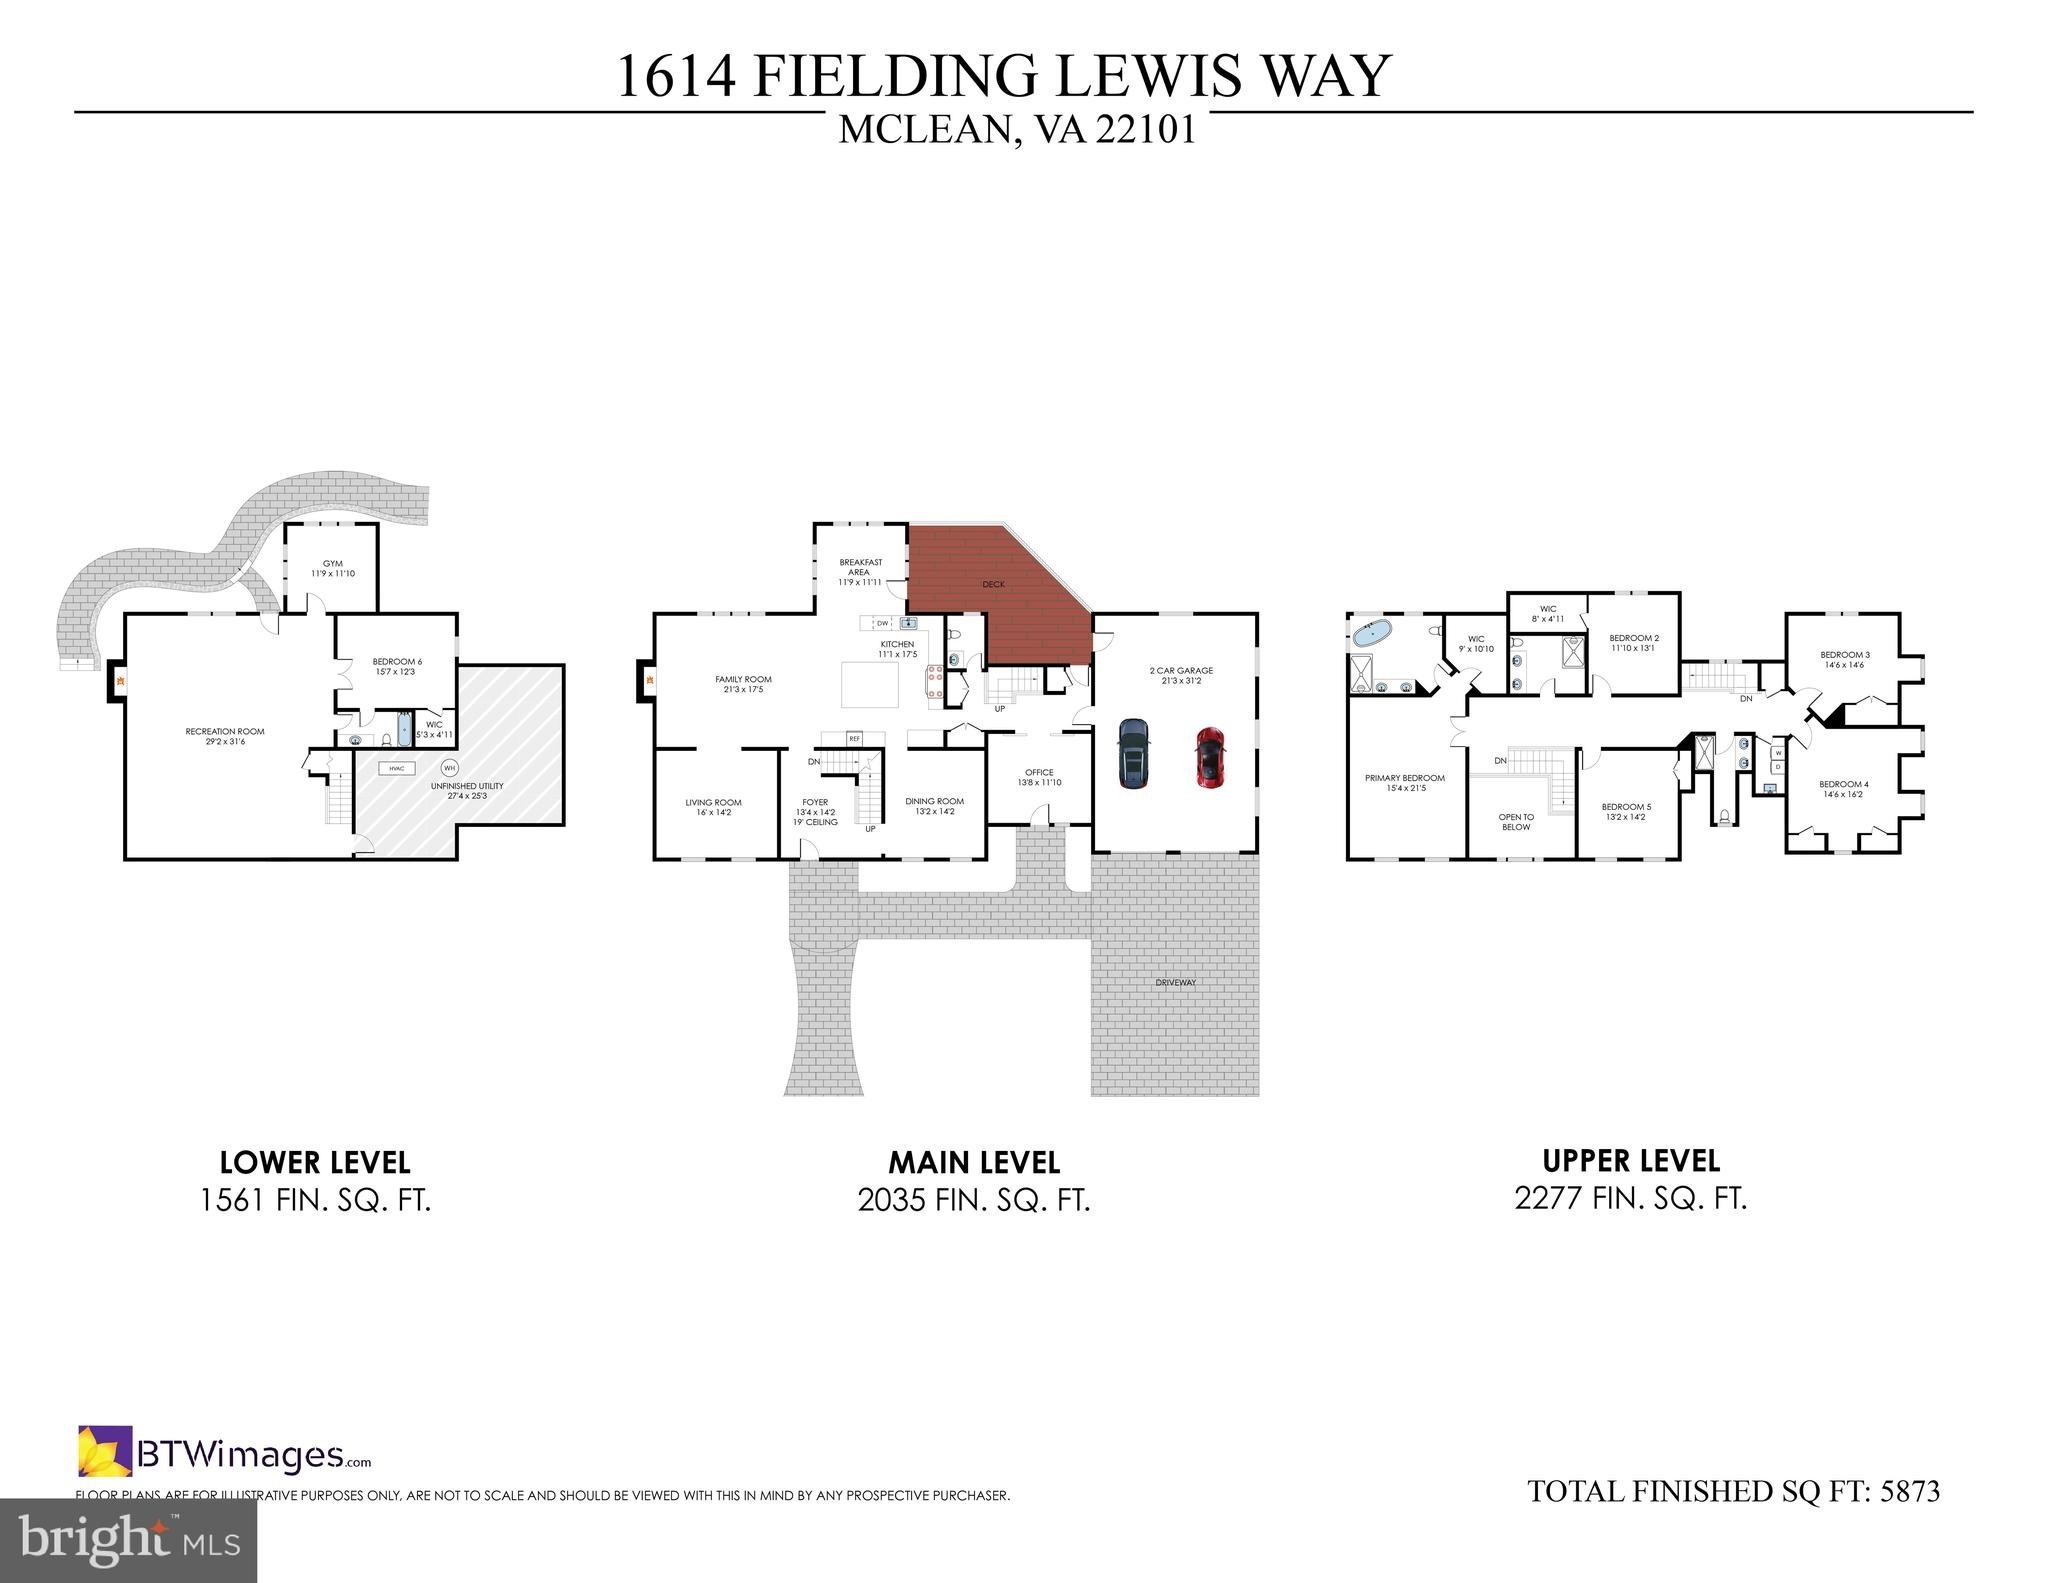 50. 1614 Fielding Lewis Way